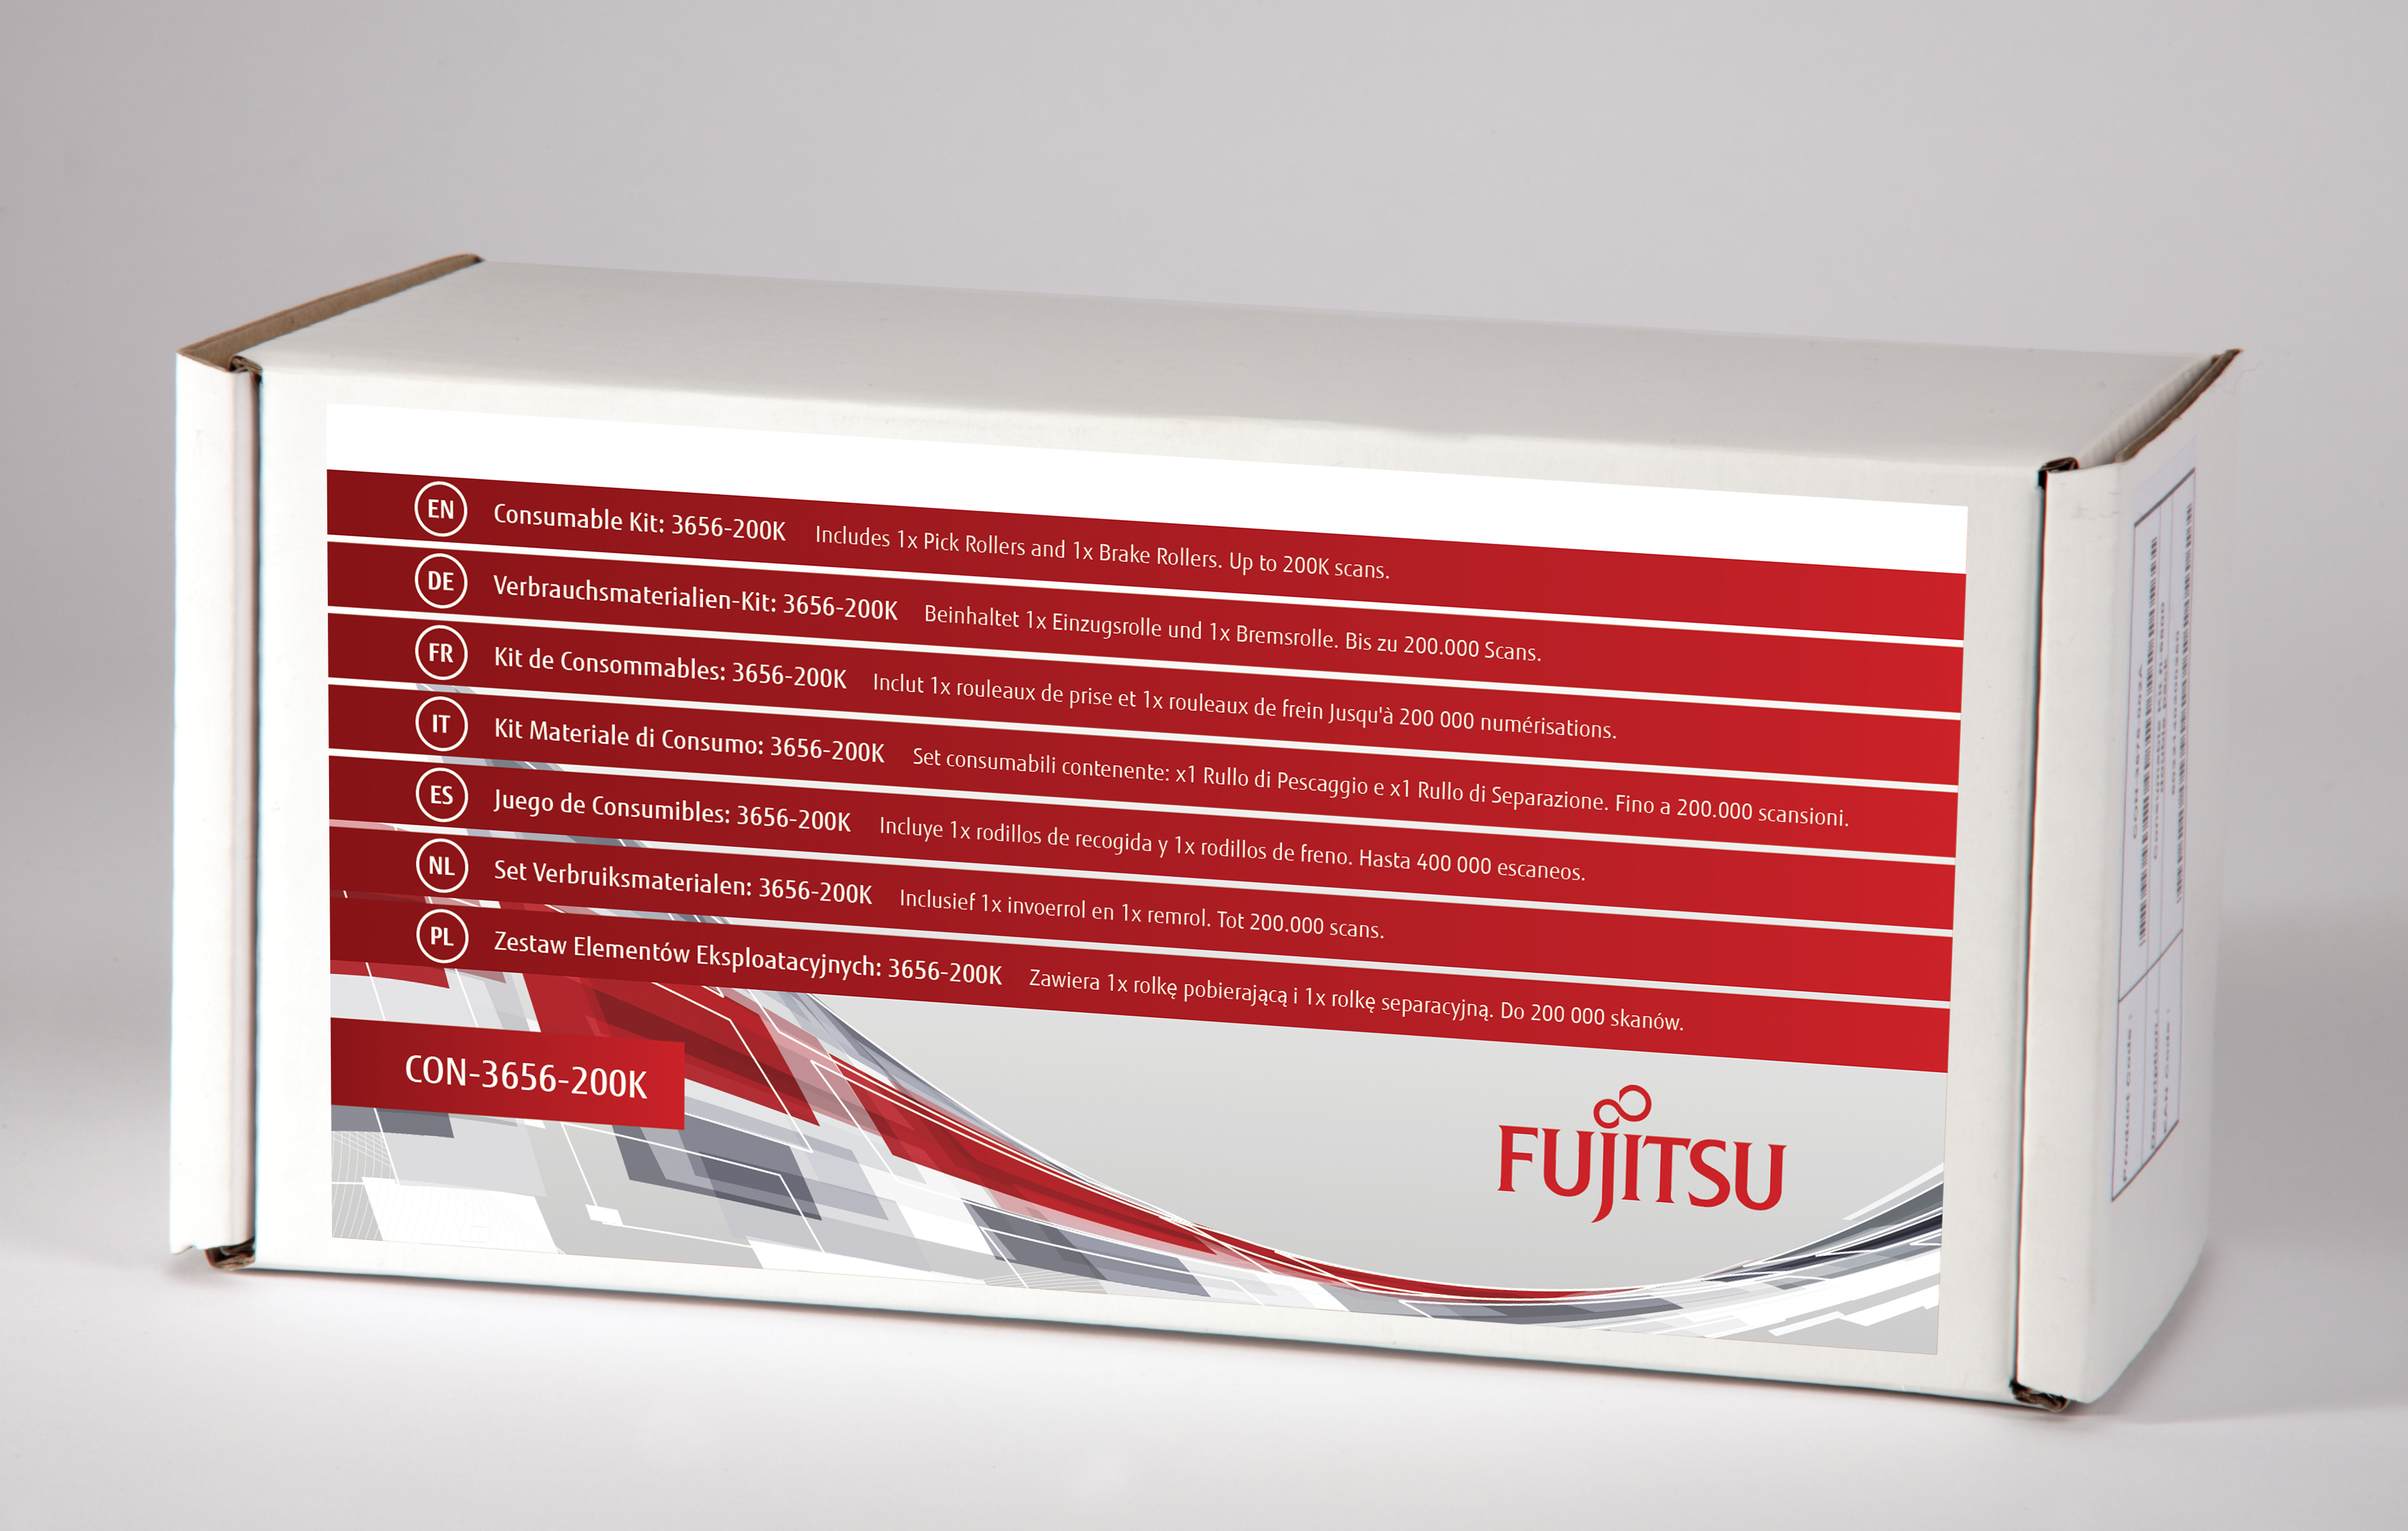 Ricoh Fujitsu Consumable Kit: 3656-200K - Scanner - Verbrauchsmaterialienkit